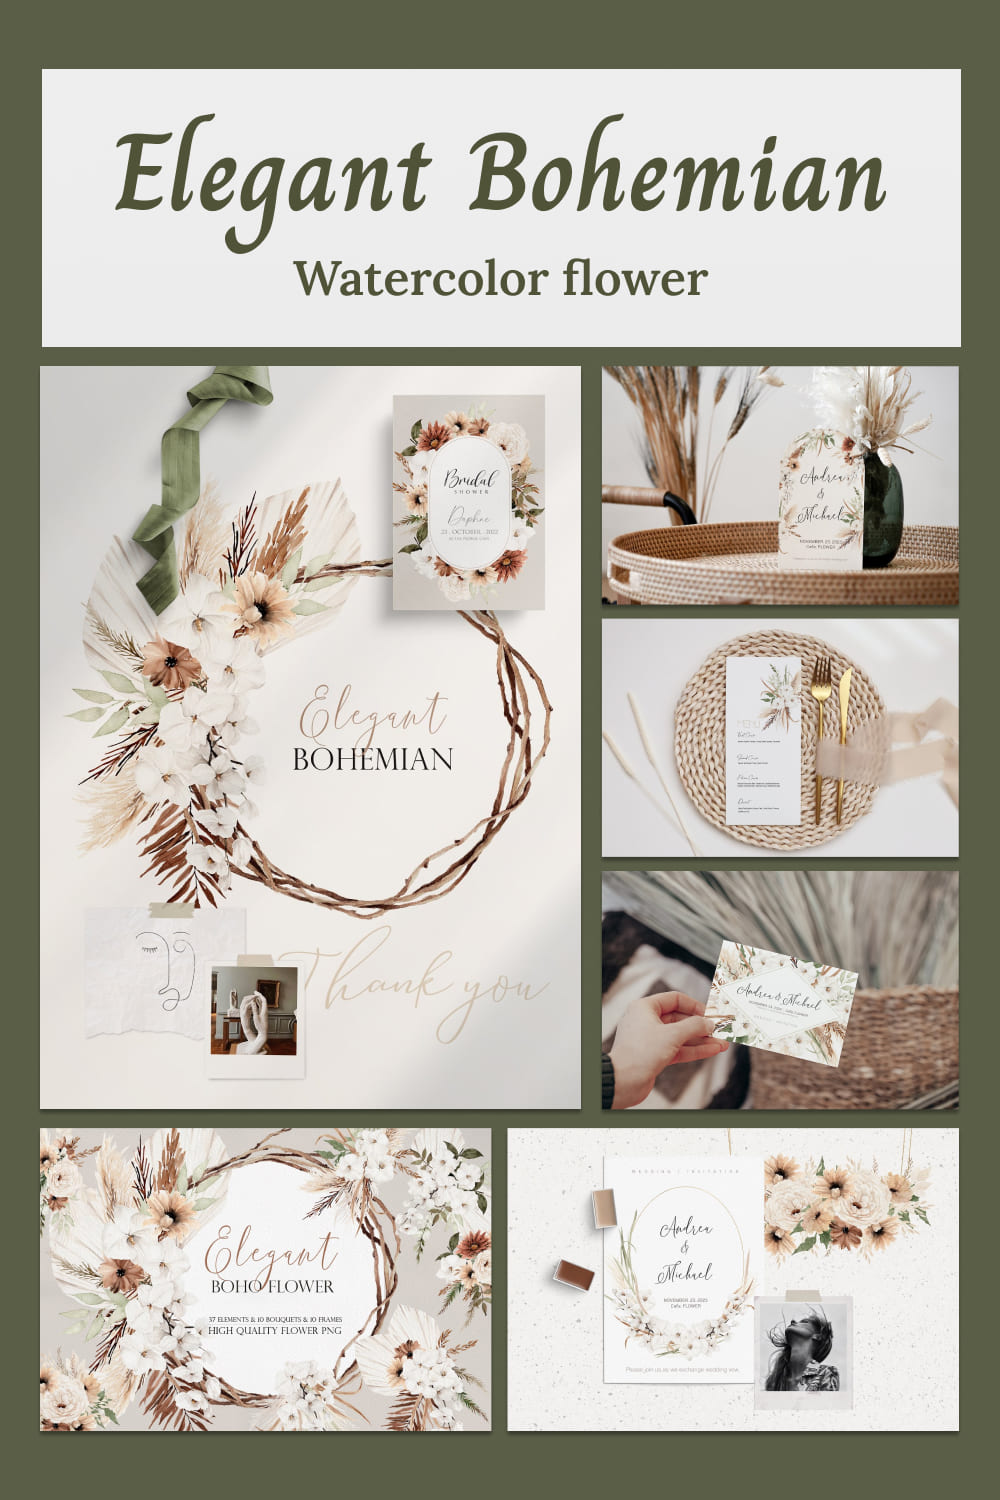 Watercolor Flower Illustrations - Elegant Bohemian pinterest image.